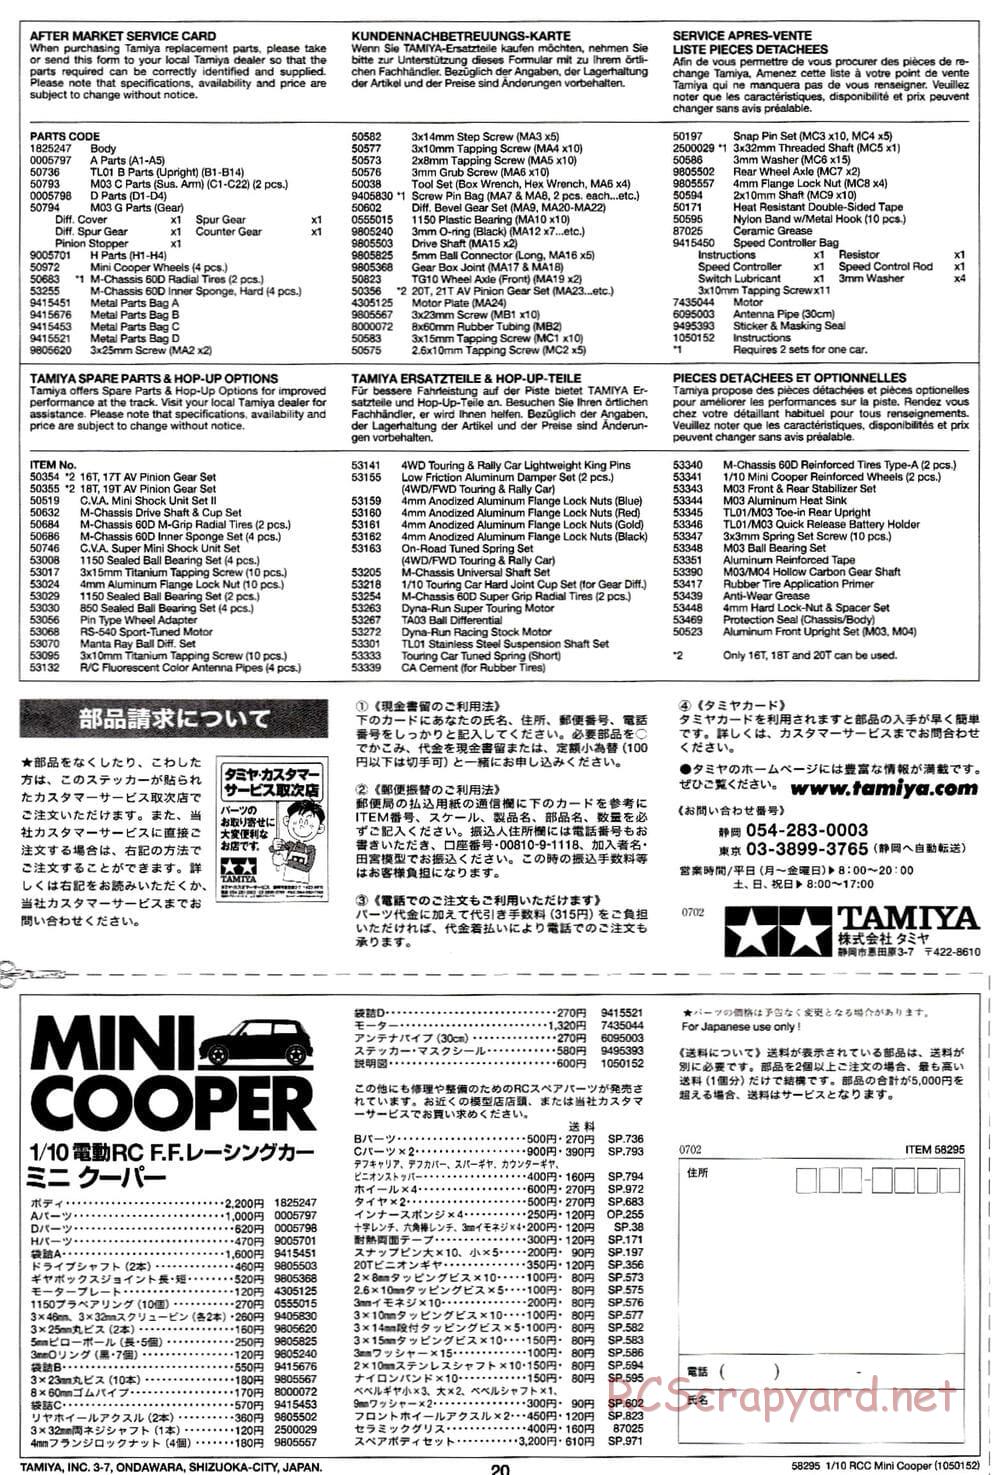 Tamiya - Mini Cooper - M03L Chassis - Manual - Page 20